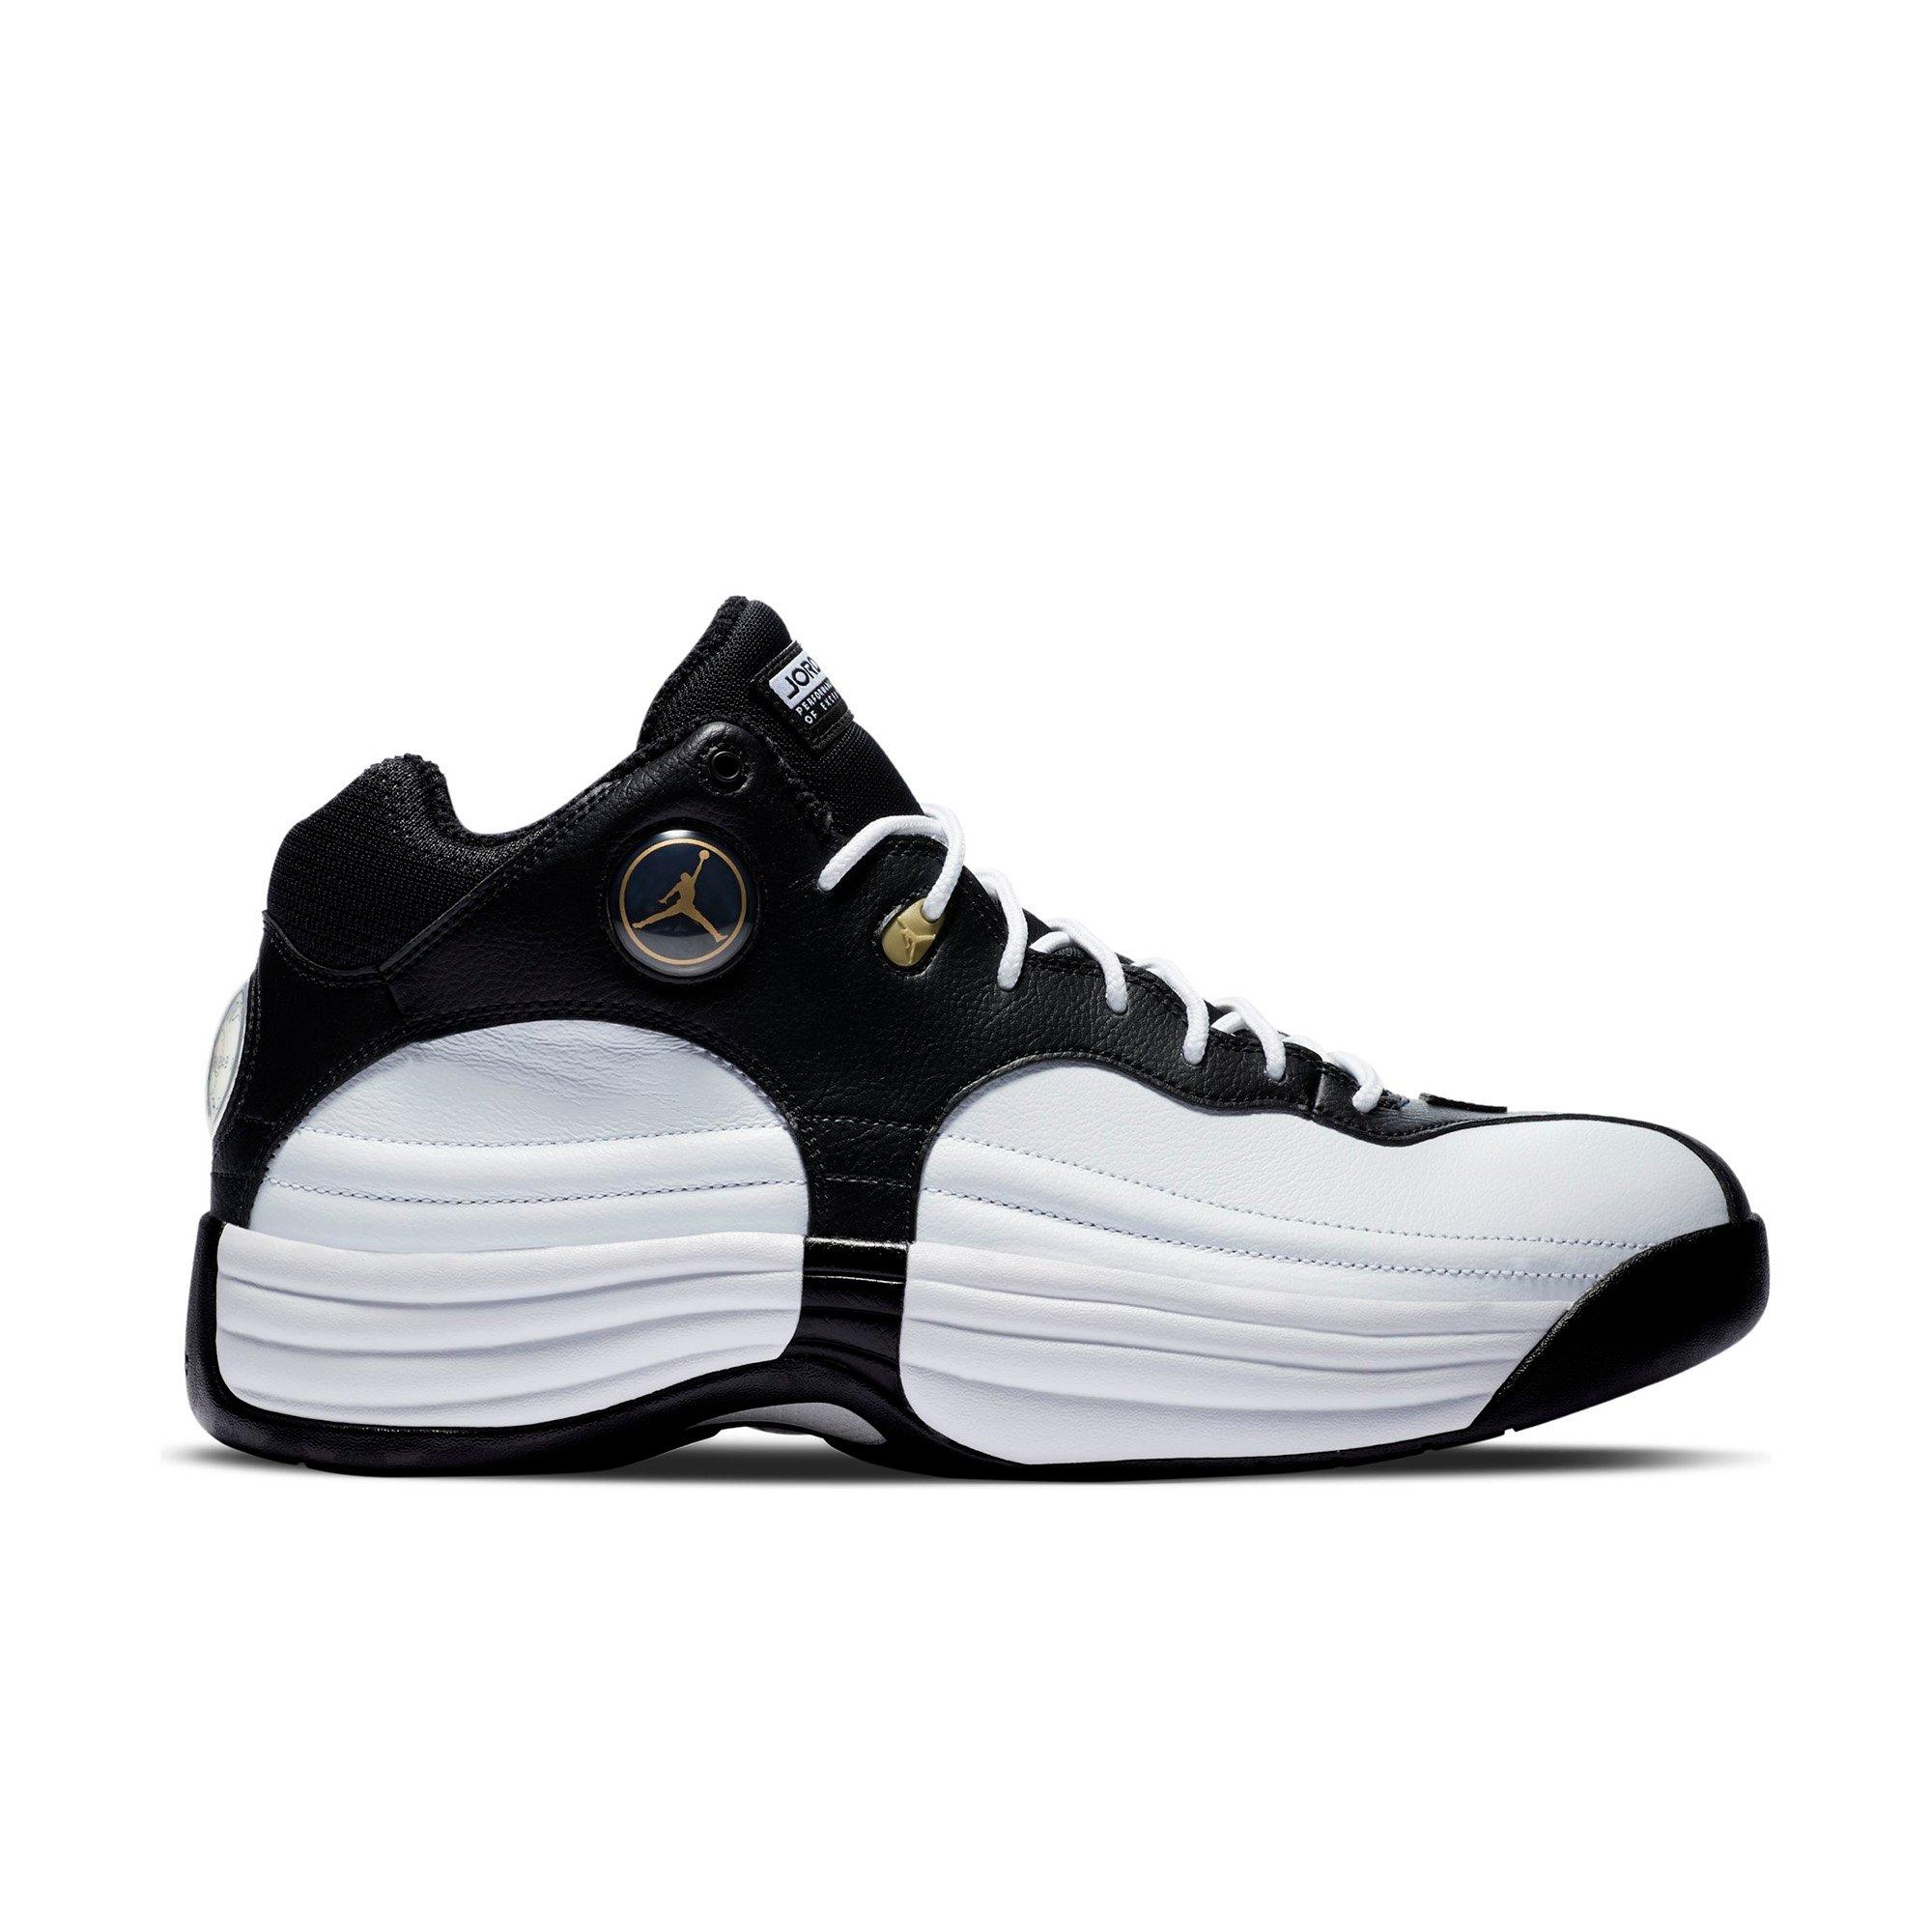 Jordan Retro 312 | Jordan Sneakers 